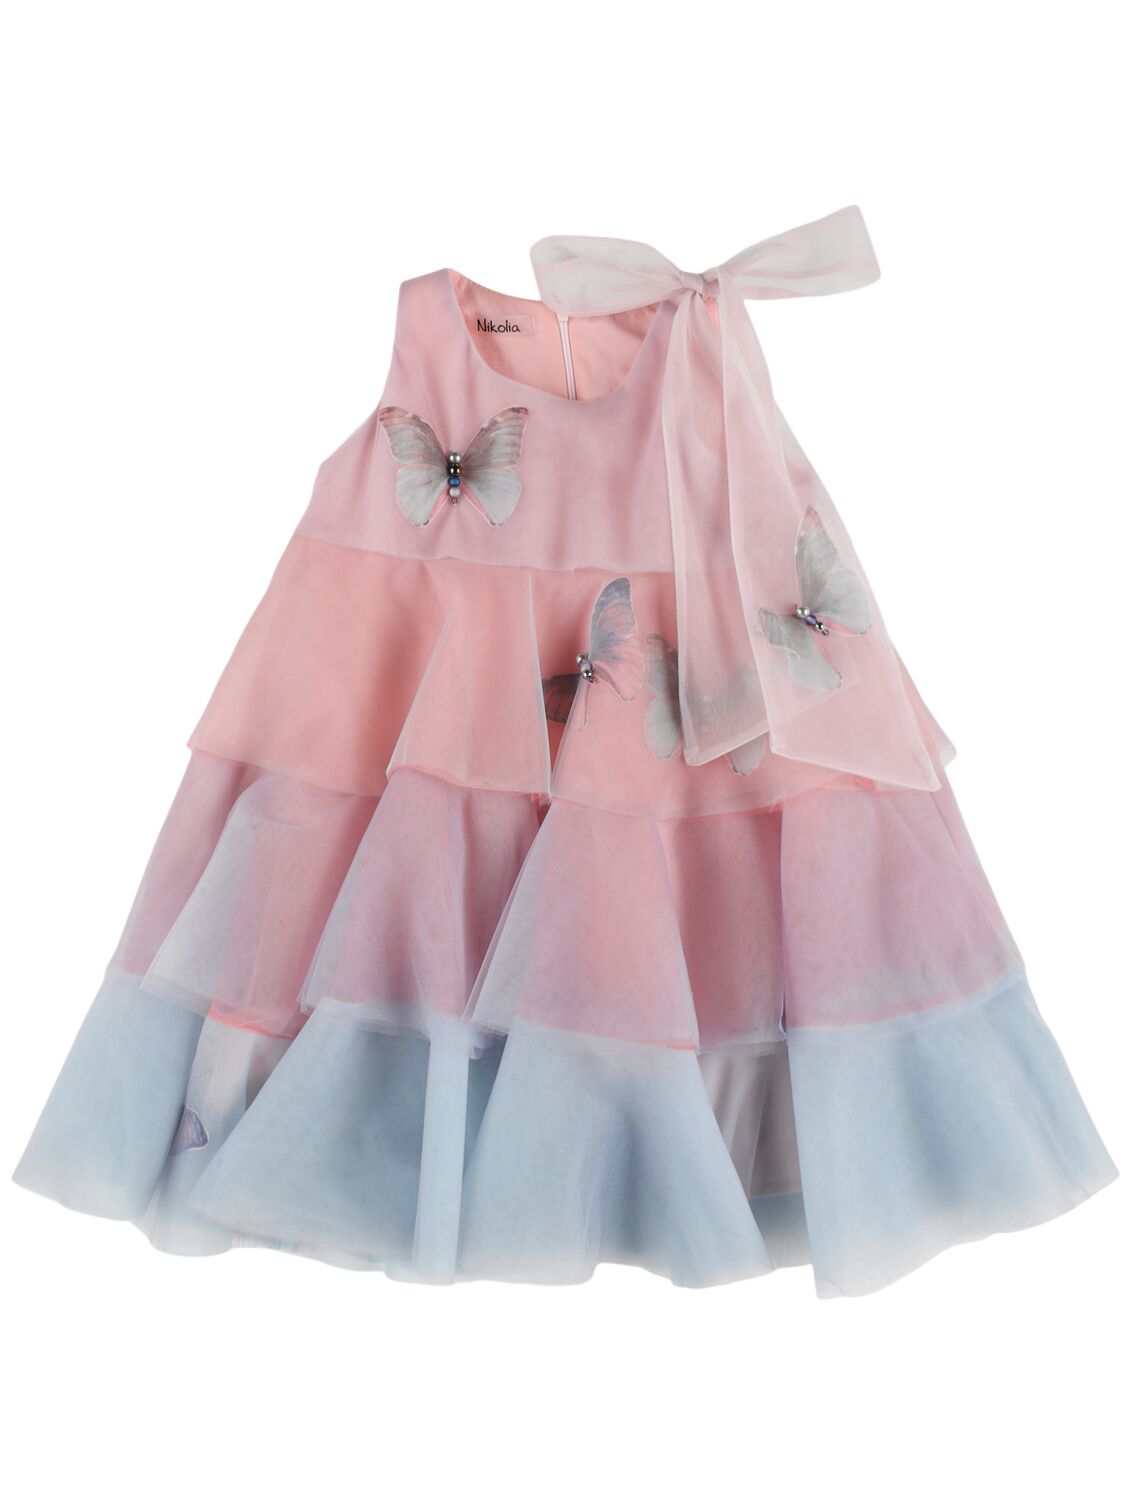 Nikolia Kids' Layered Tulle Dress W/ Appliqués In Multicolor